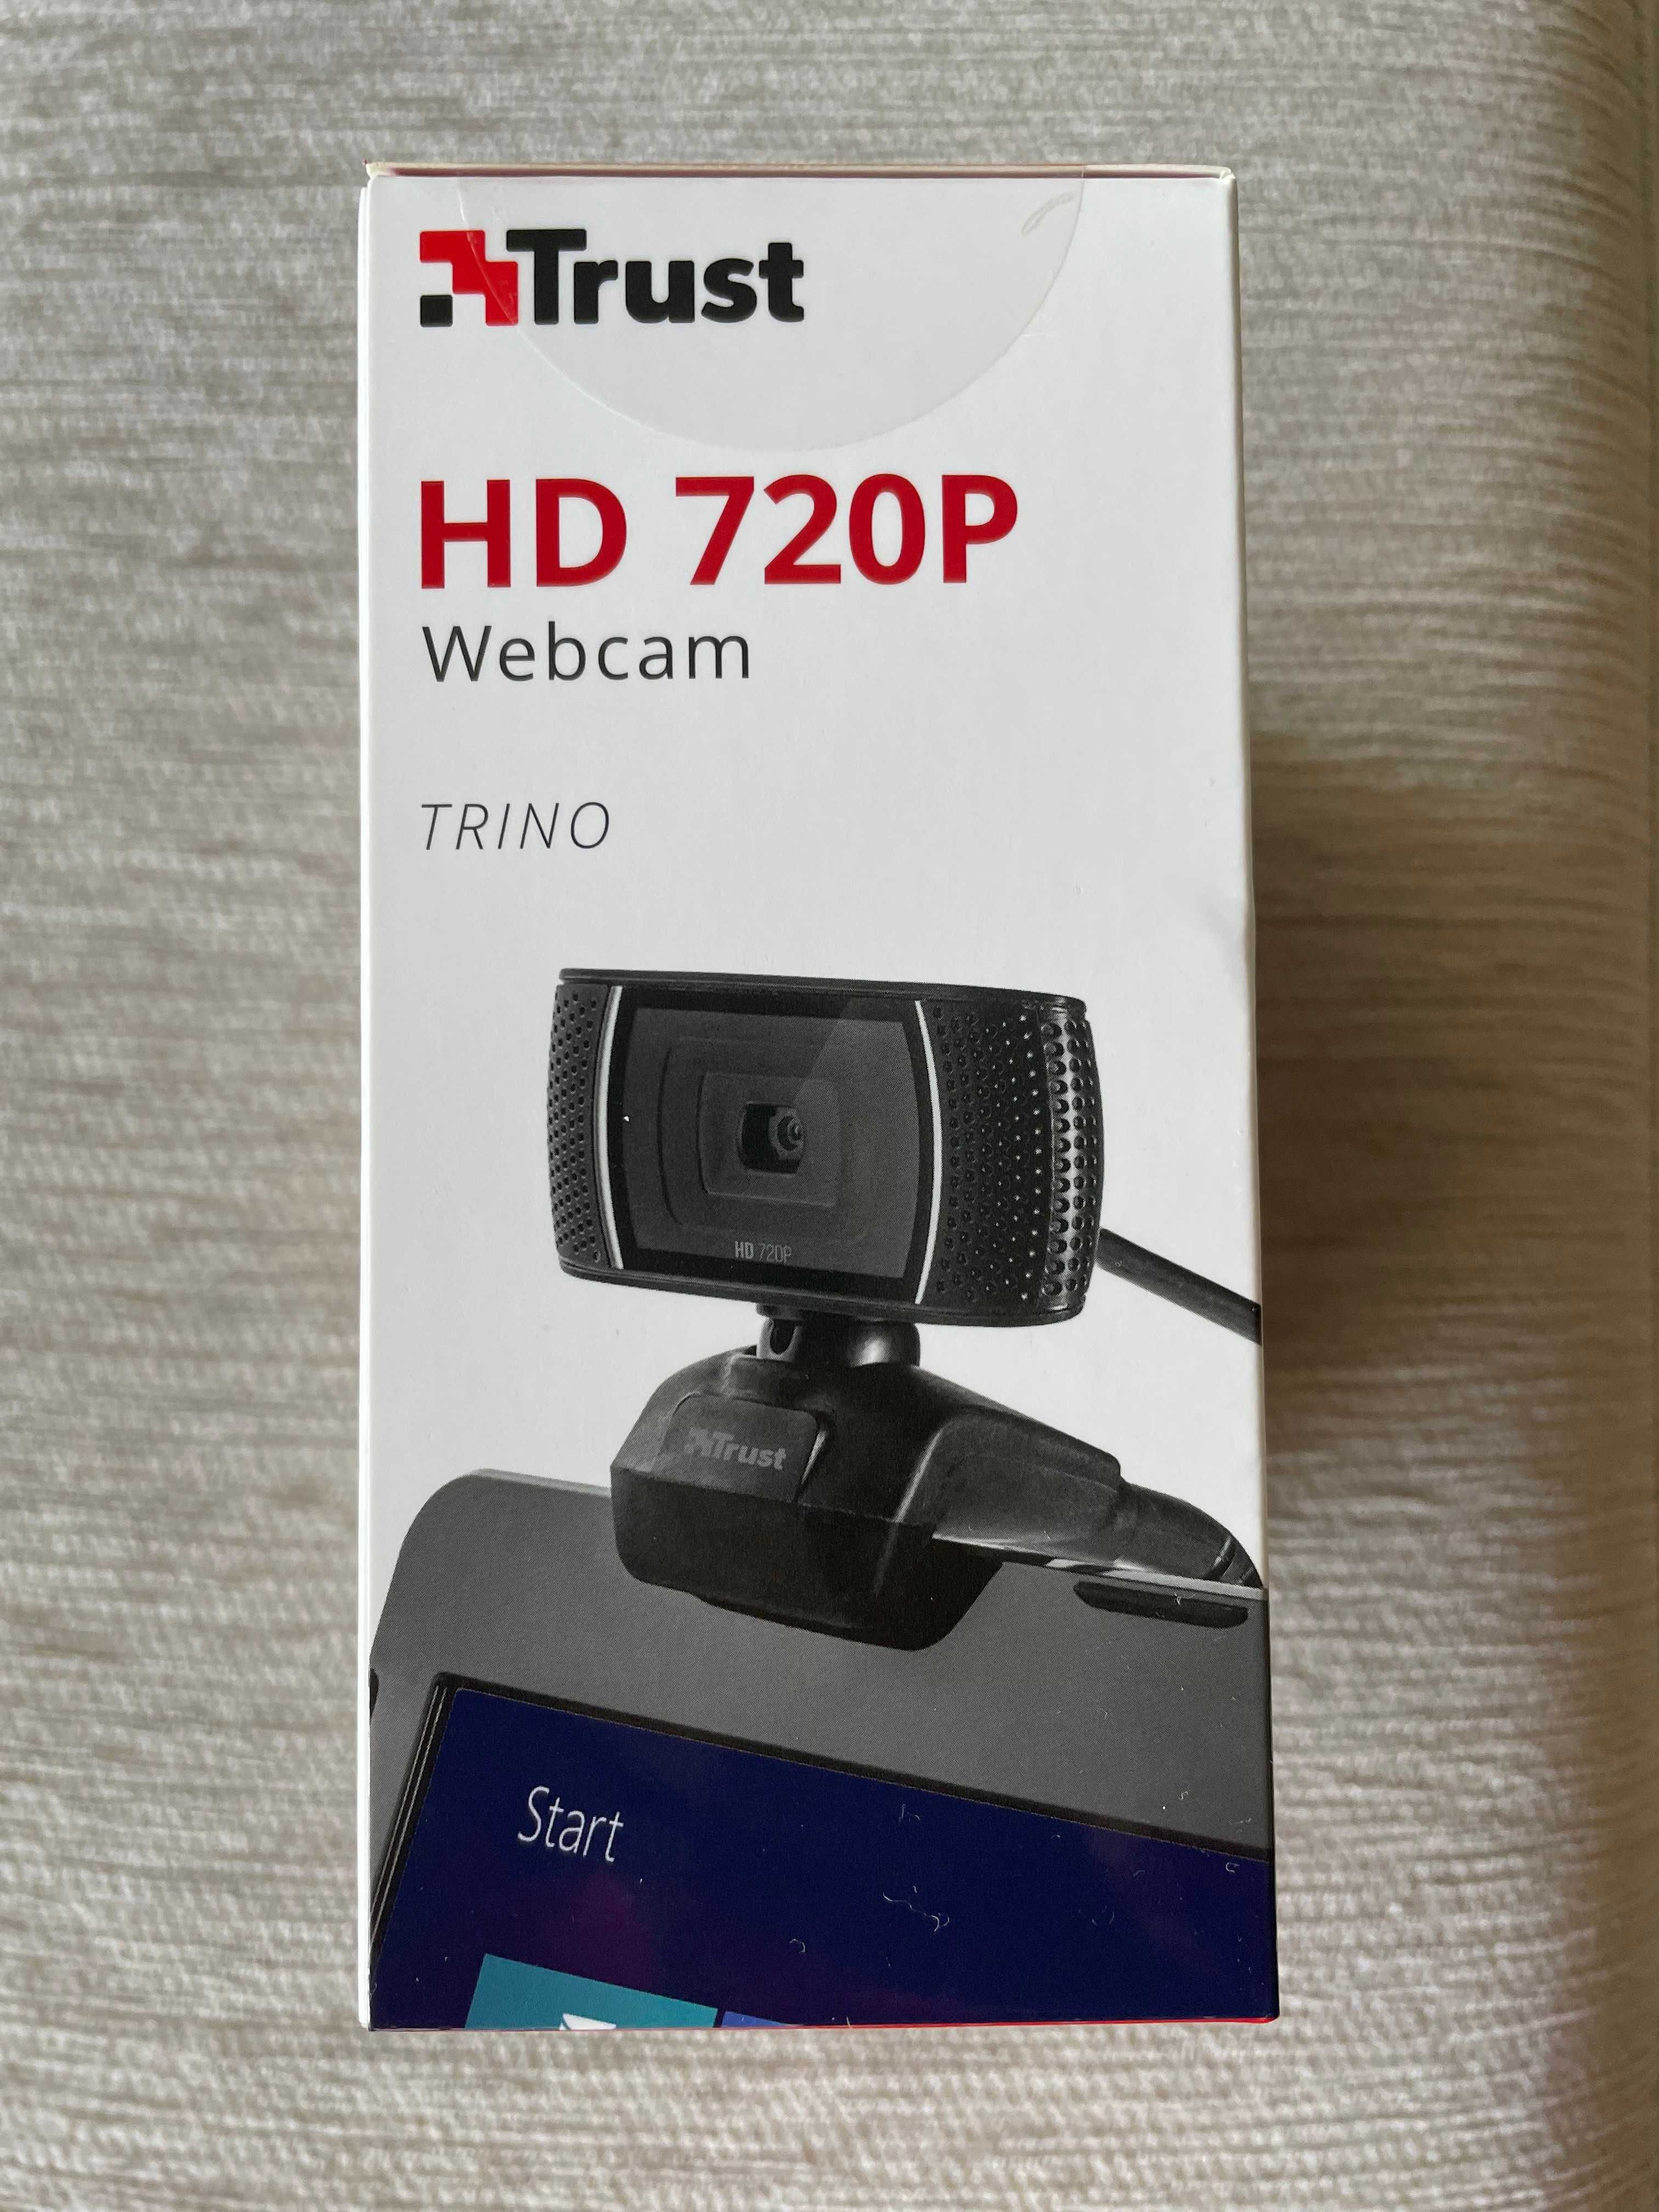 Webcam Trust trino hd 720p - Nova